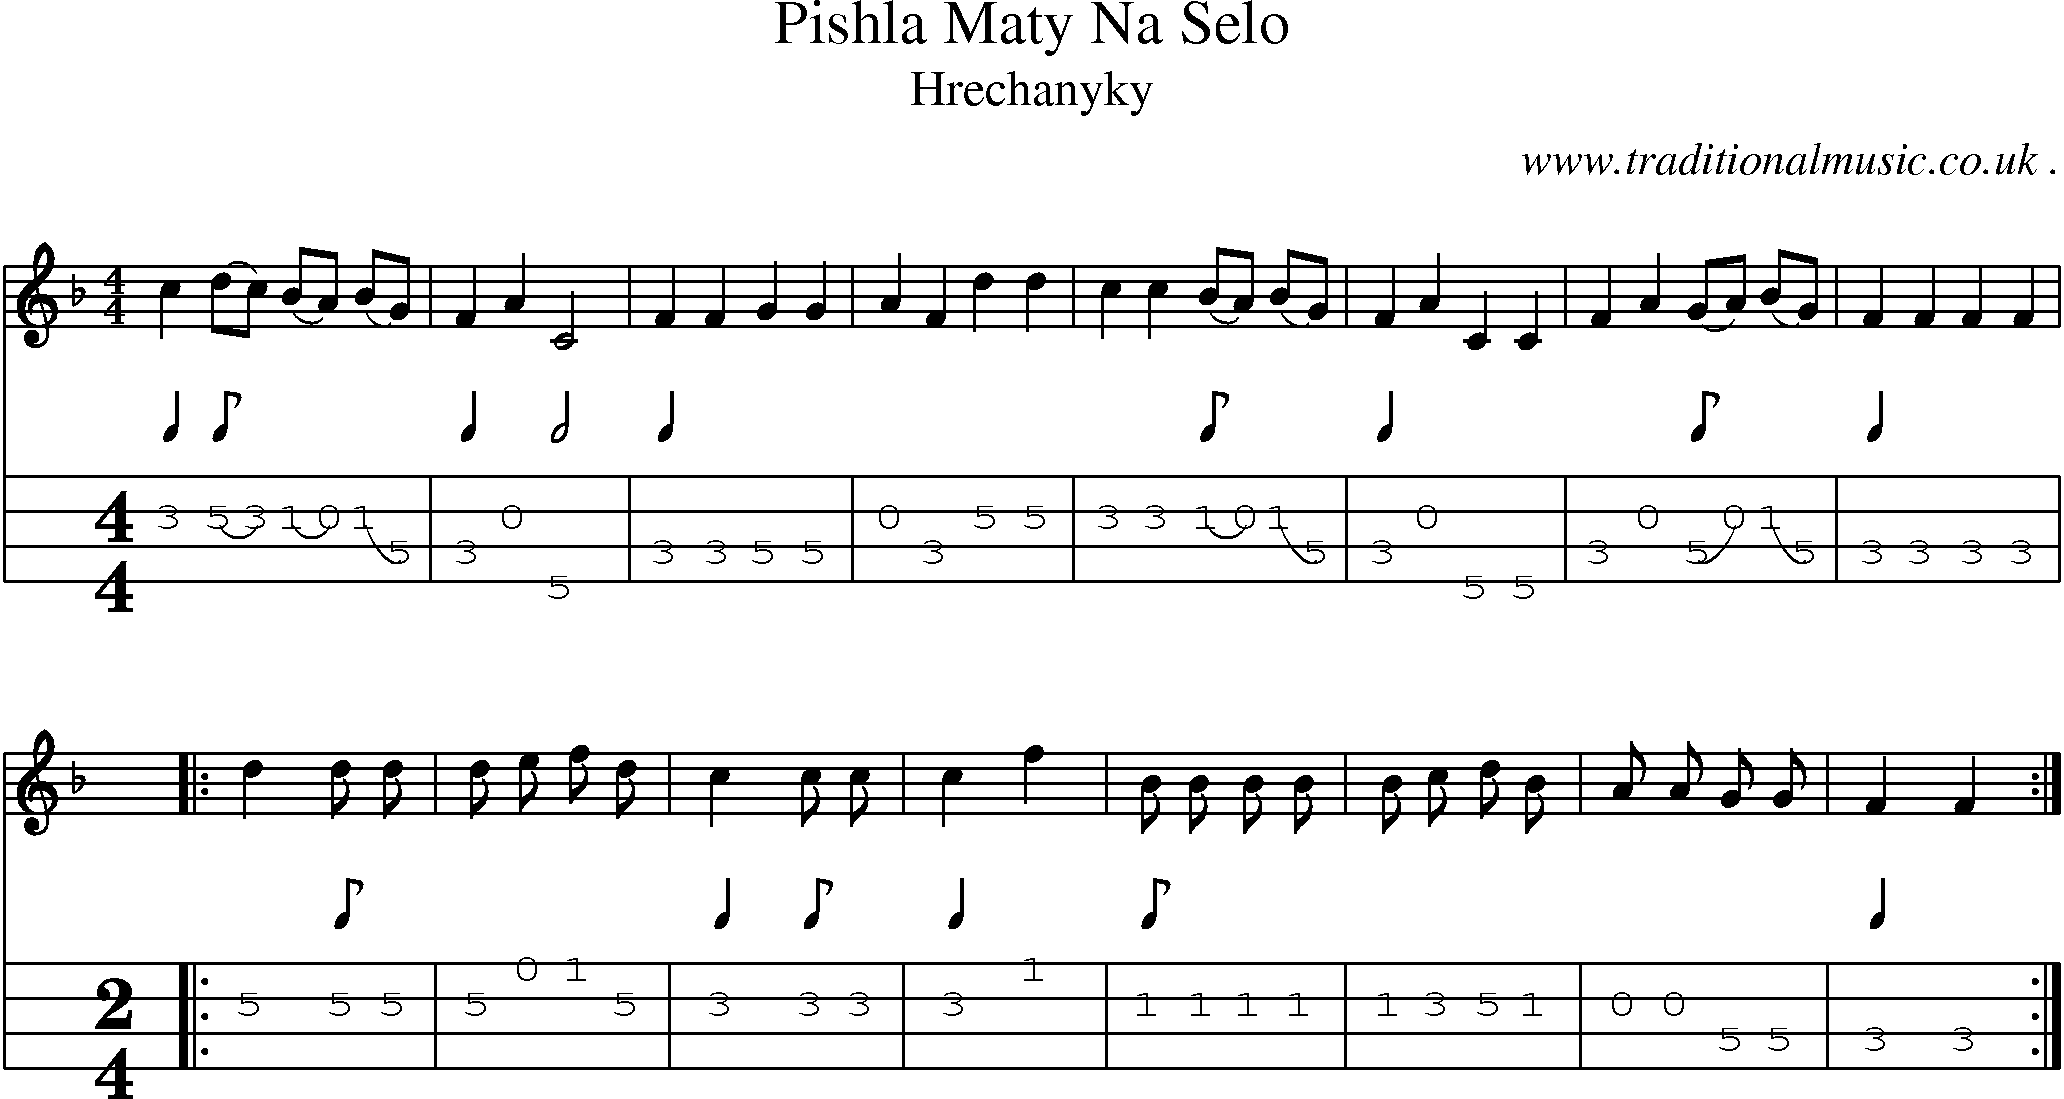 Sheet-Music and Mandolin Tabs for Pishla Maty Na Selo